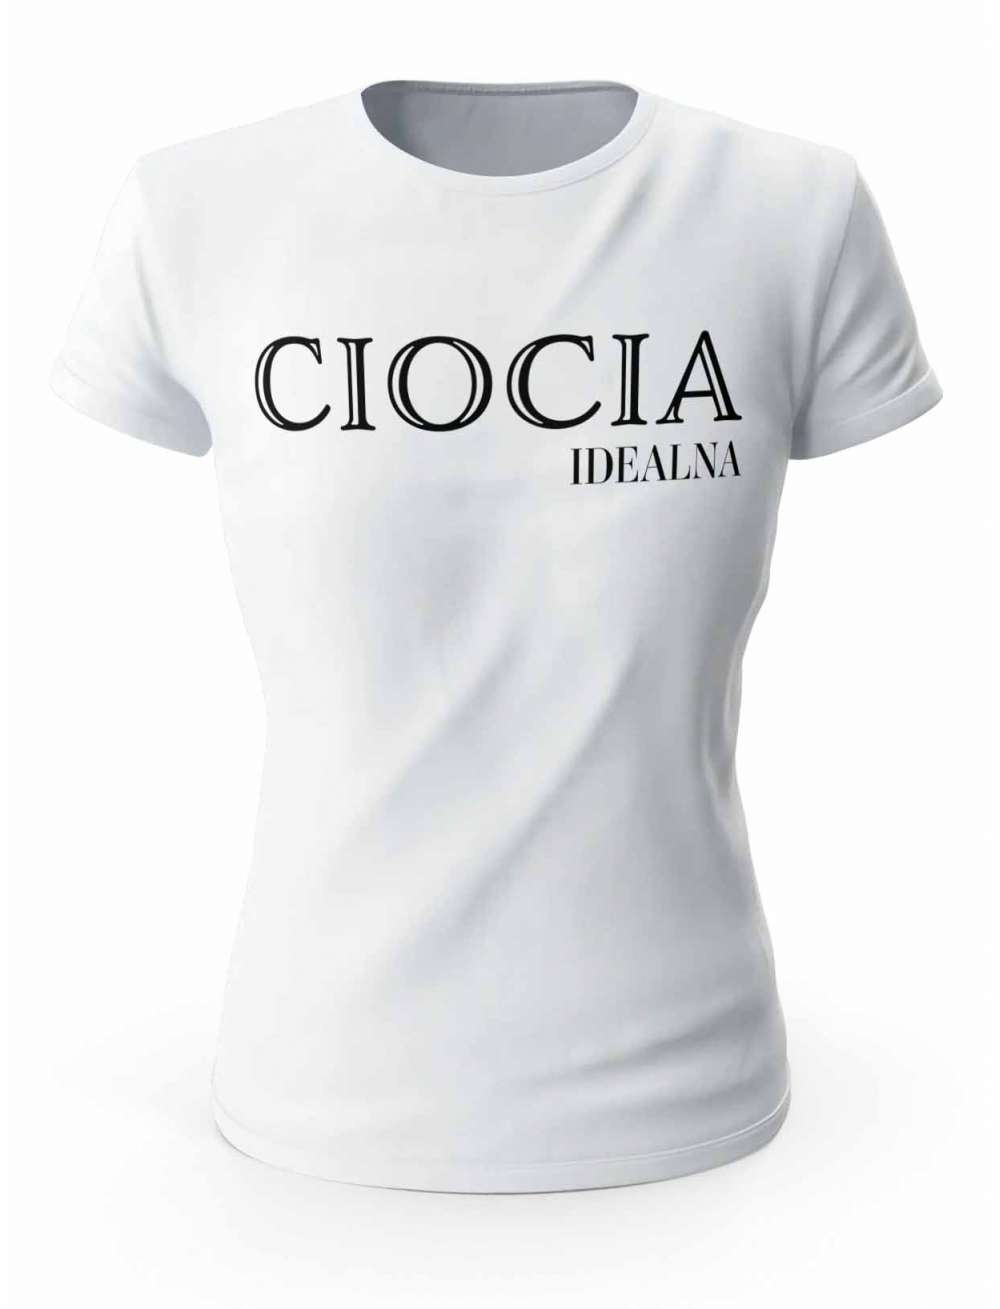 Koszulka Idealna Ciocia, T-shirt Dla Cioci